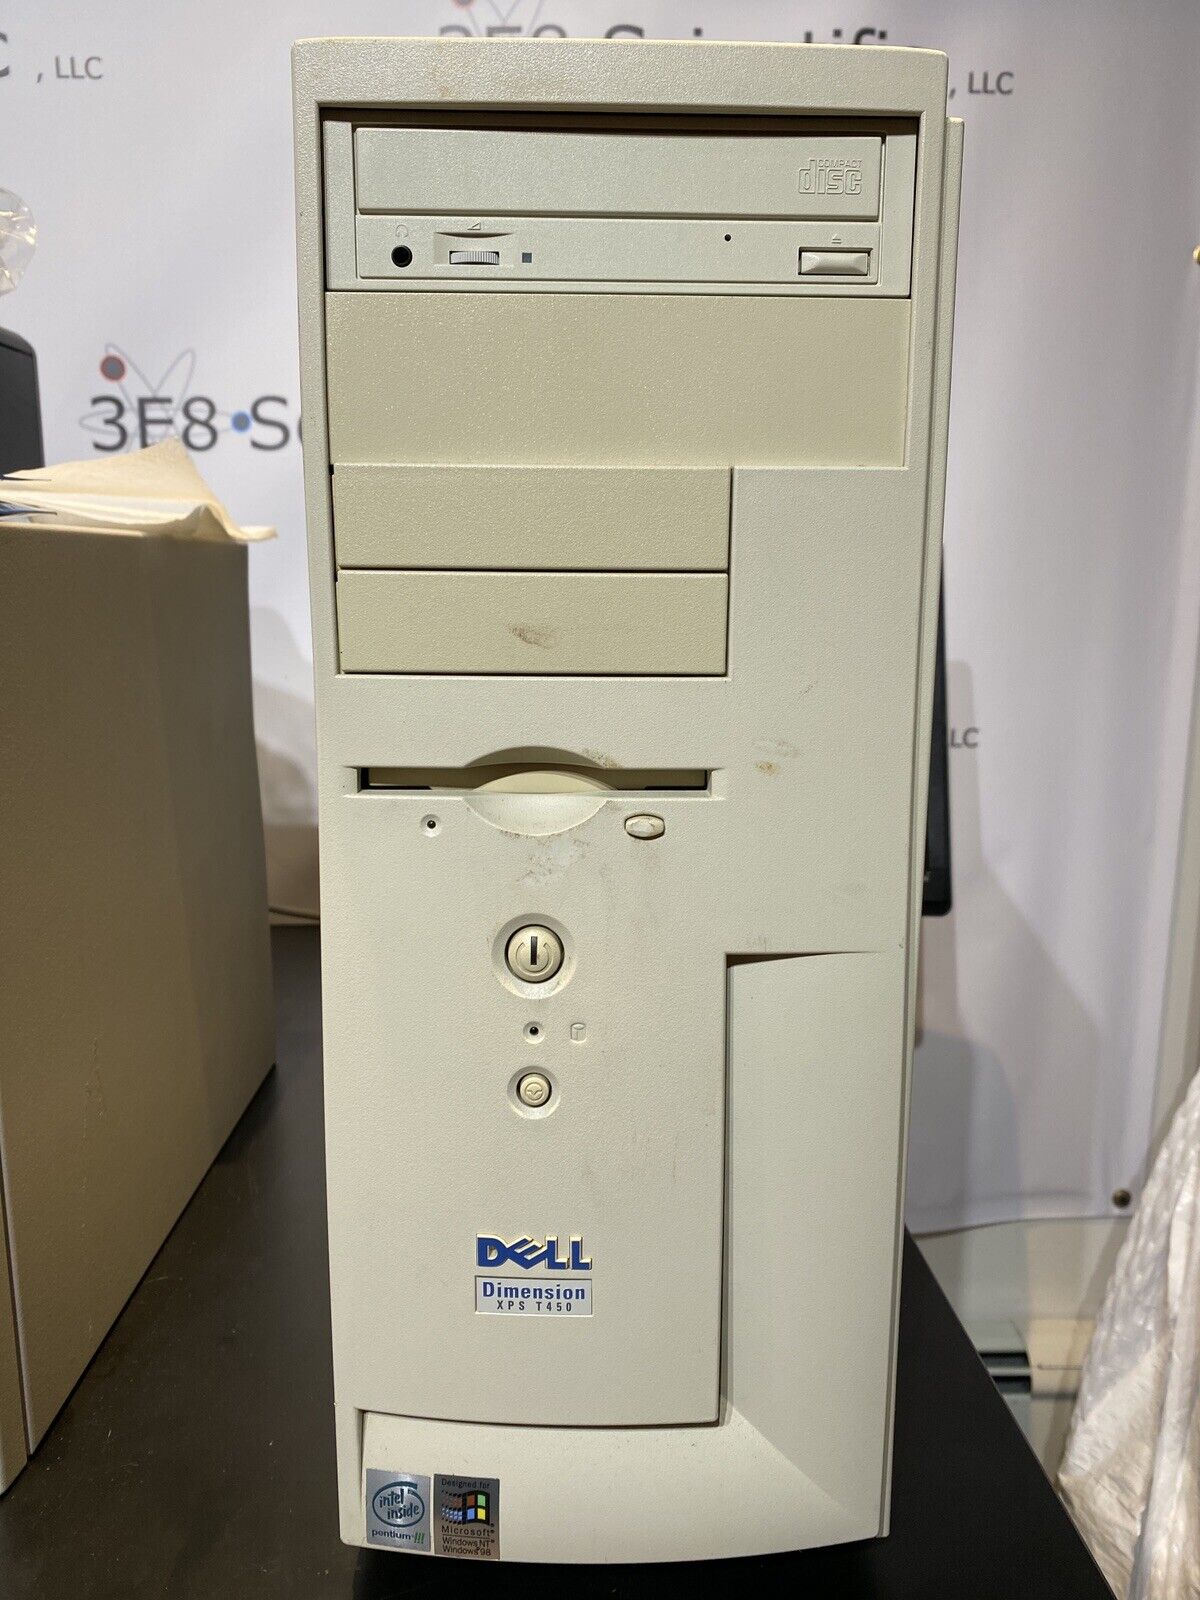 Dell Dimension XPS T450 (ISA, PCI, 256MB Ram, 450MHz) Windows XP